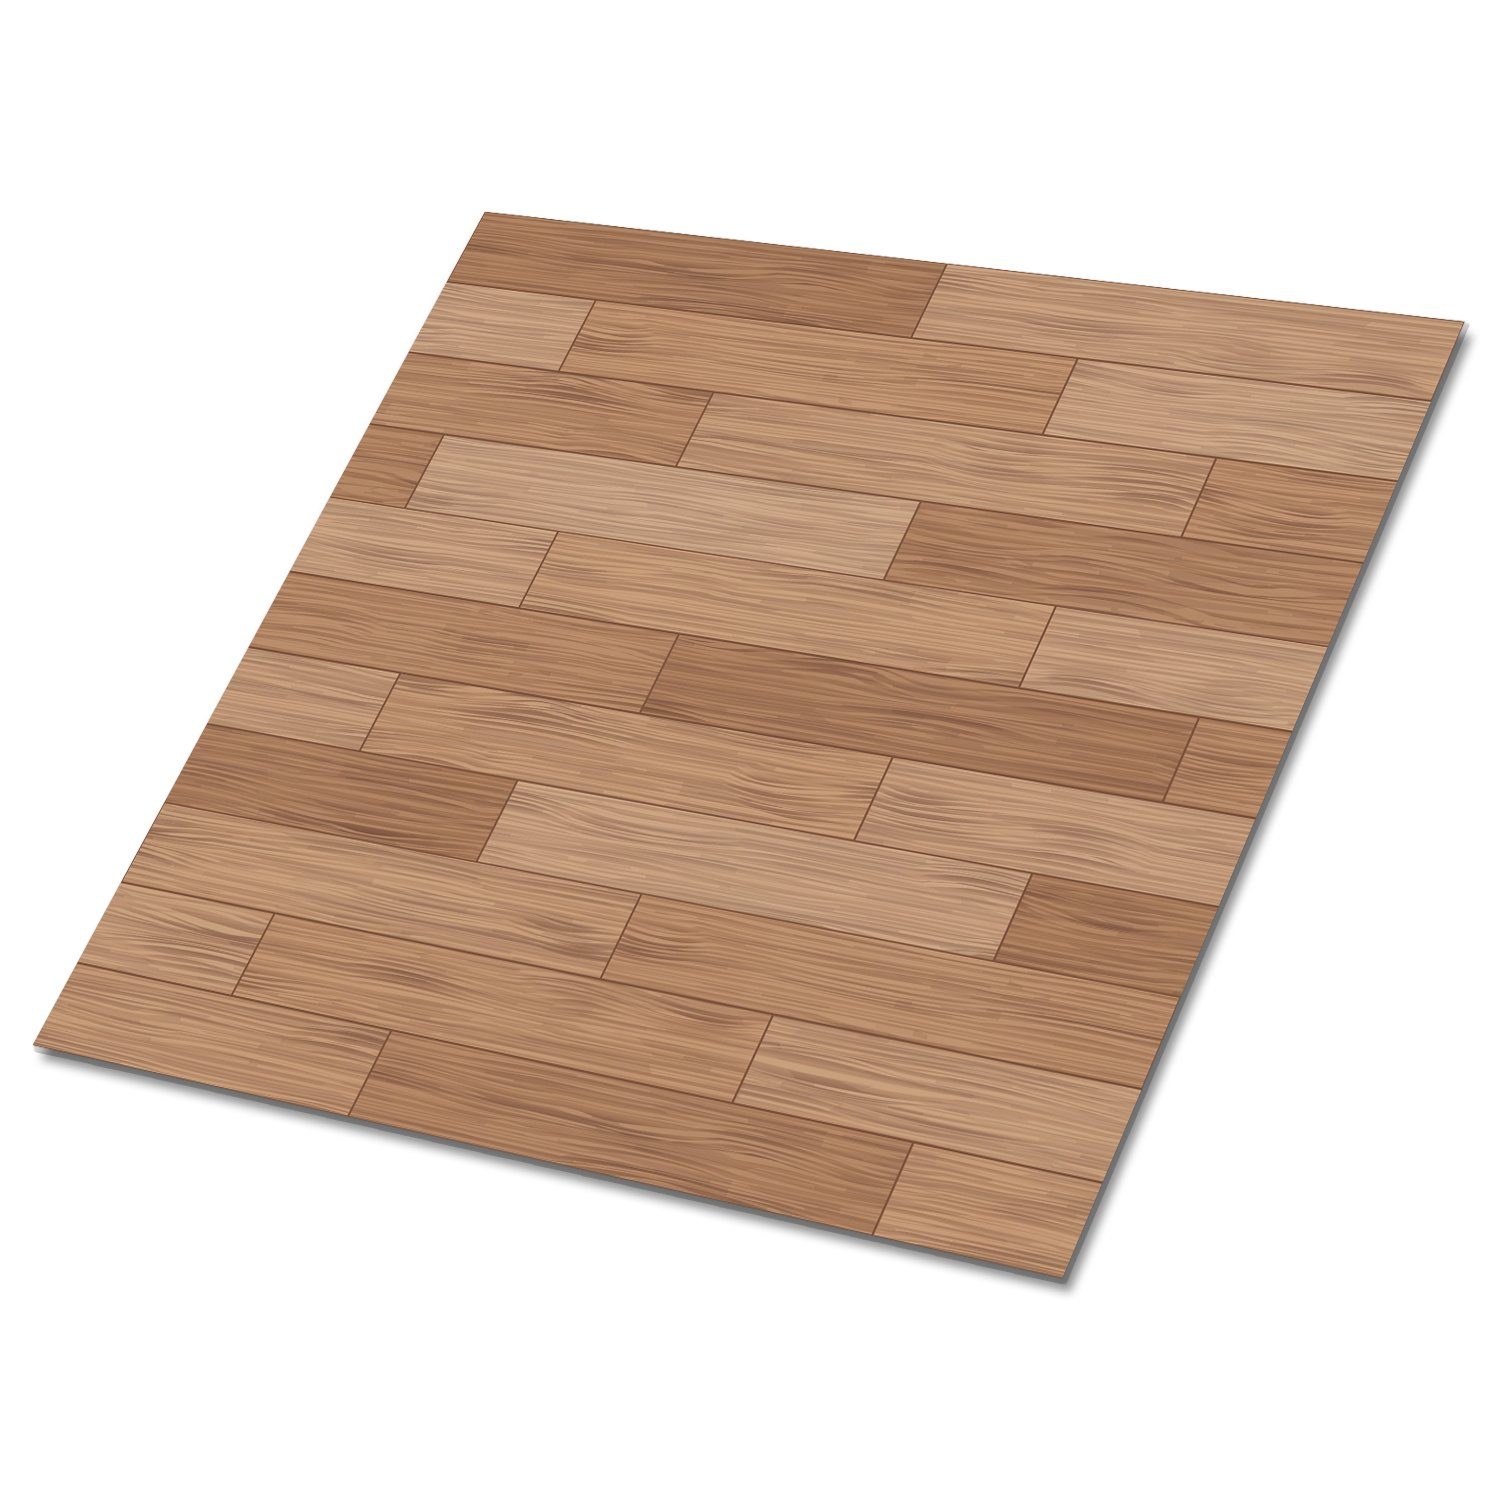 Tulup Vinylfliesen PVC Selbstklebende Fliesen Platten 30 cm x 30 cm Wandpaneele 9 Stück Holzboden | Vinylboden